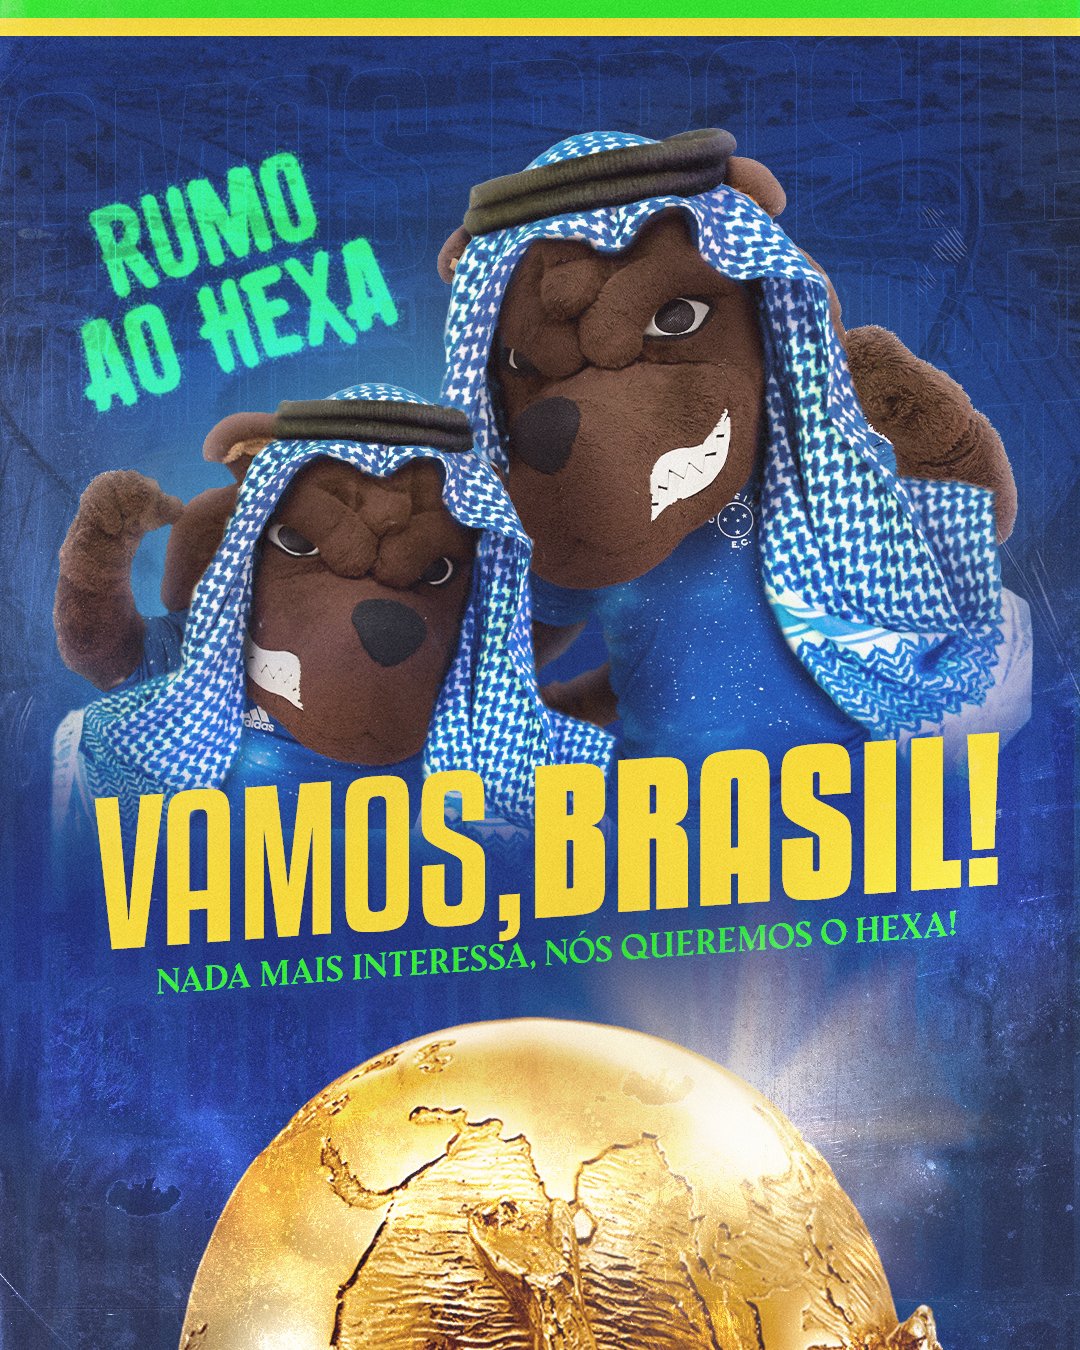 Vai, Brasil! Começa a Jornada Rumo ao Hexa! - Papo Aberto - NuCommunity